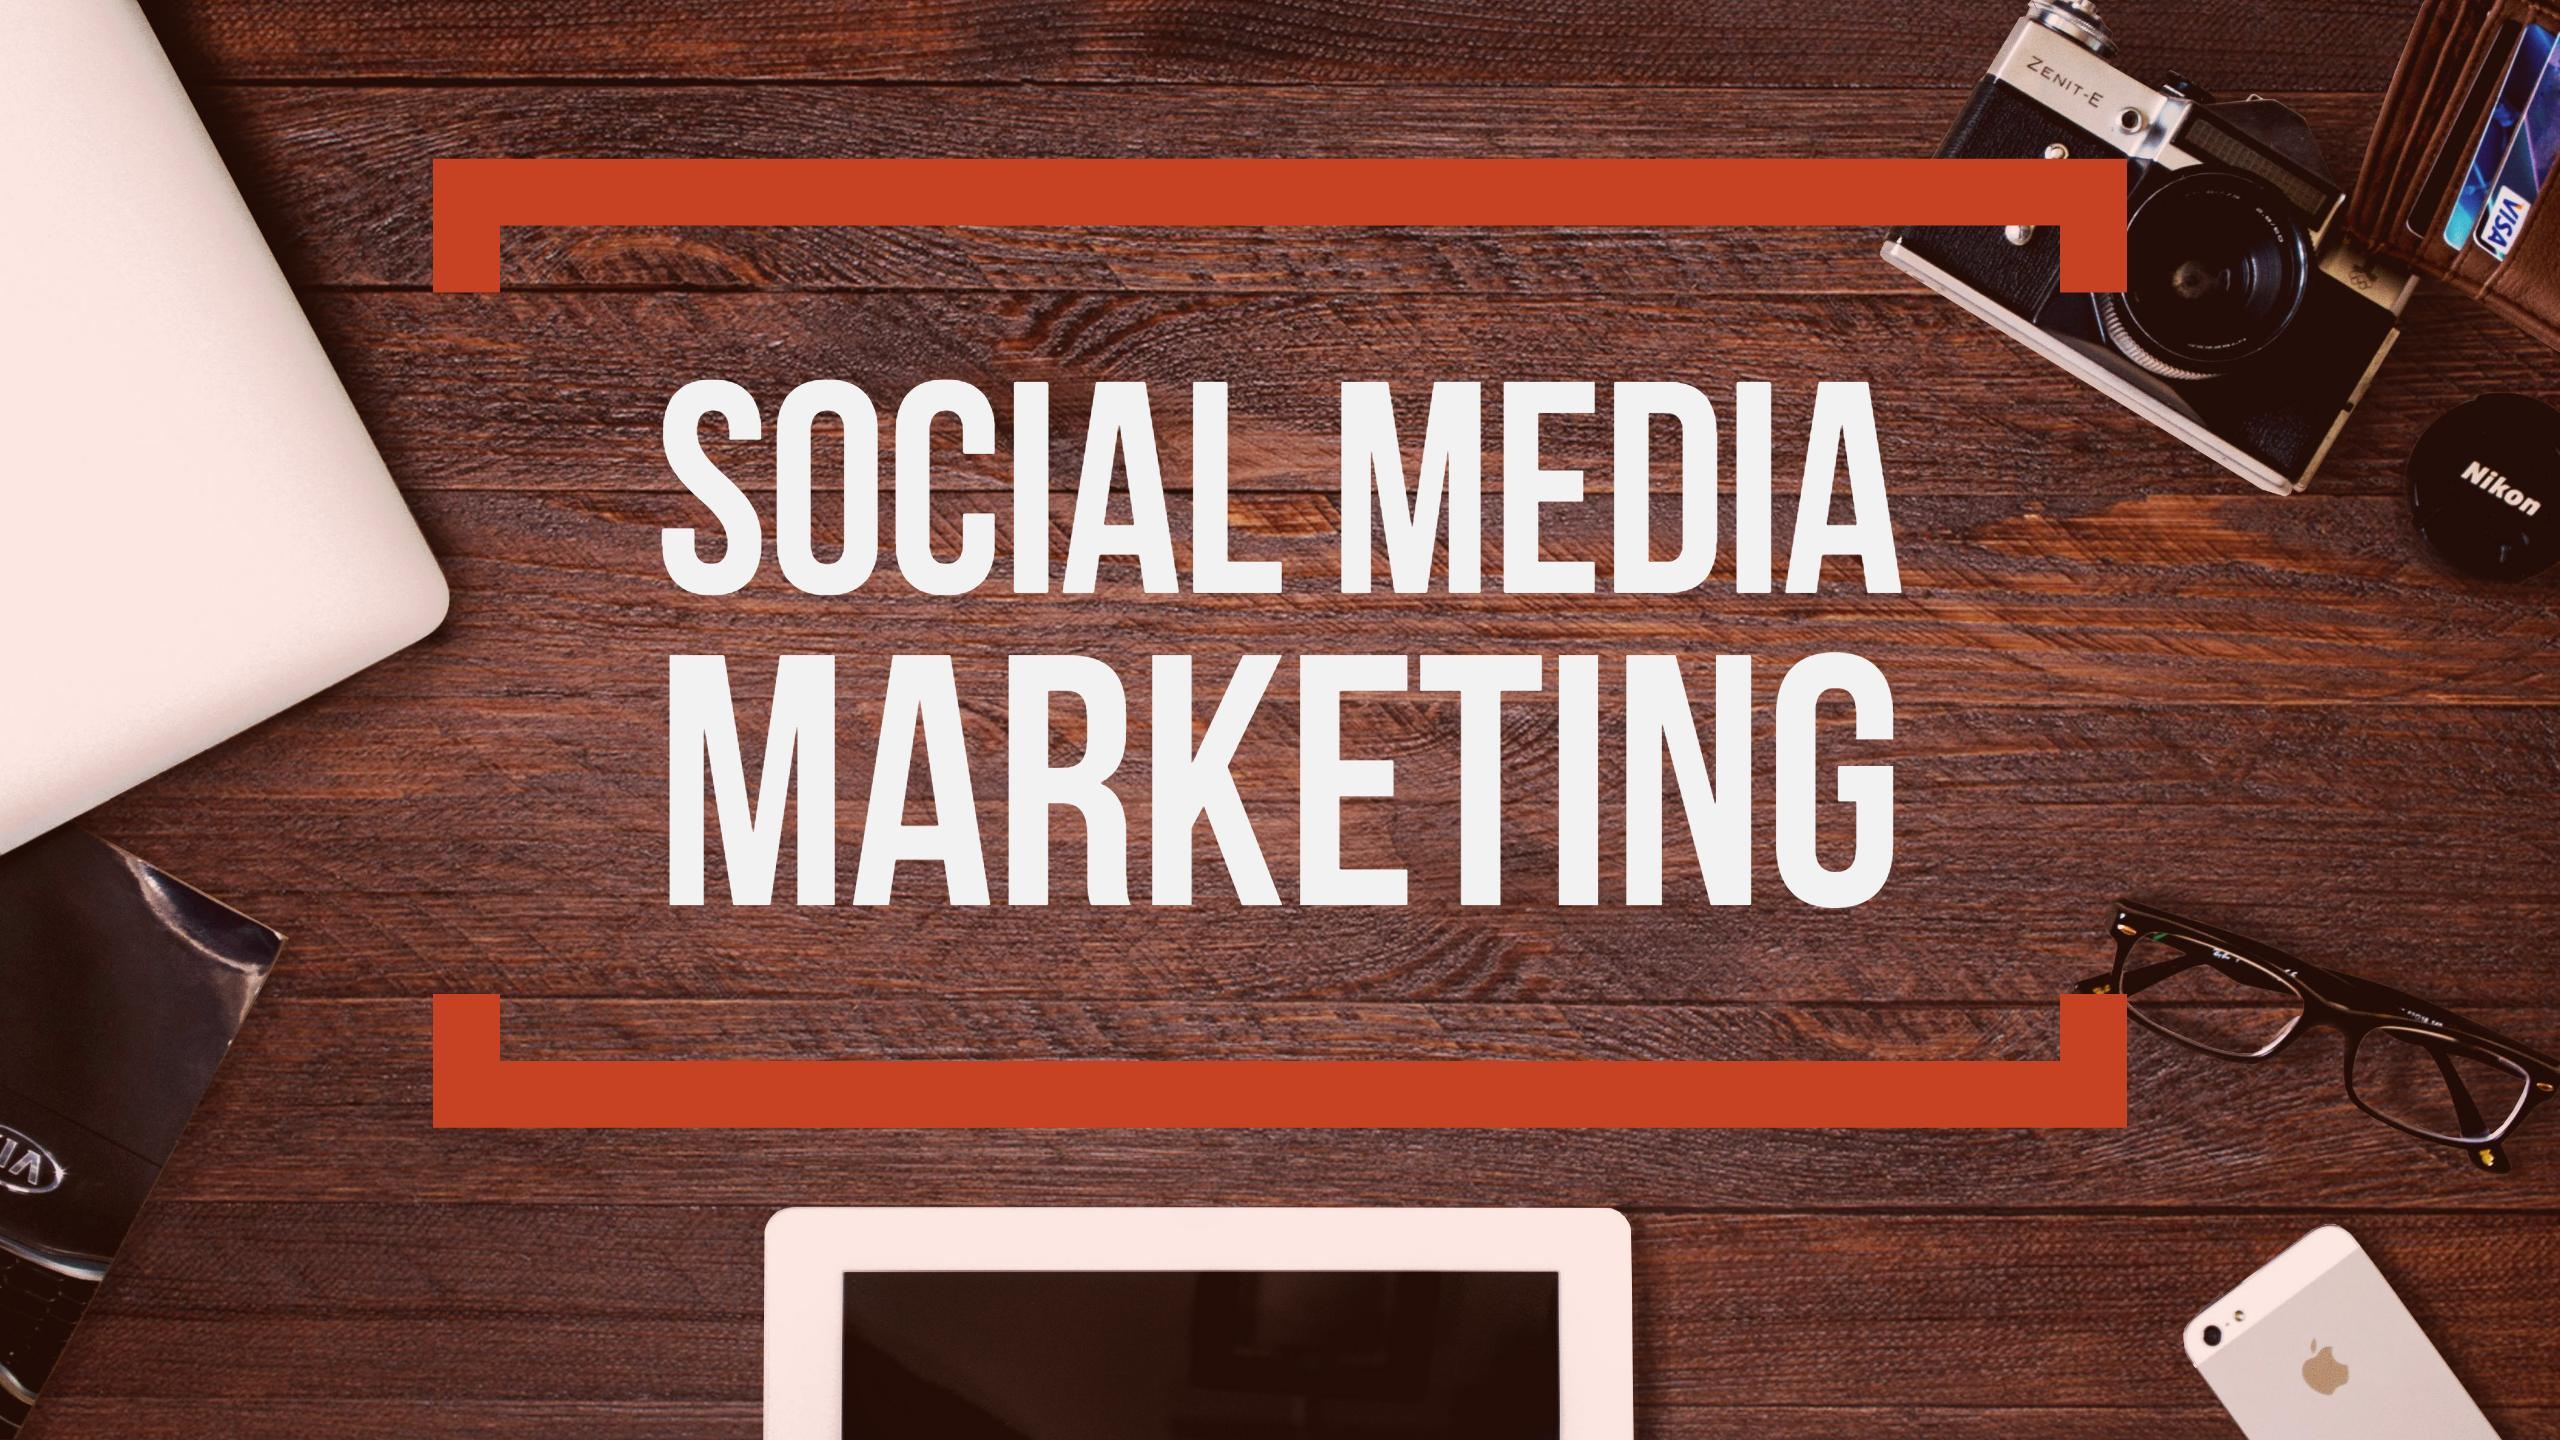 2560x1440 Social Media Marketing Wallpapers Top Free Social Media Marketing Backgrounds